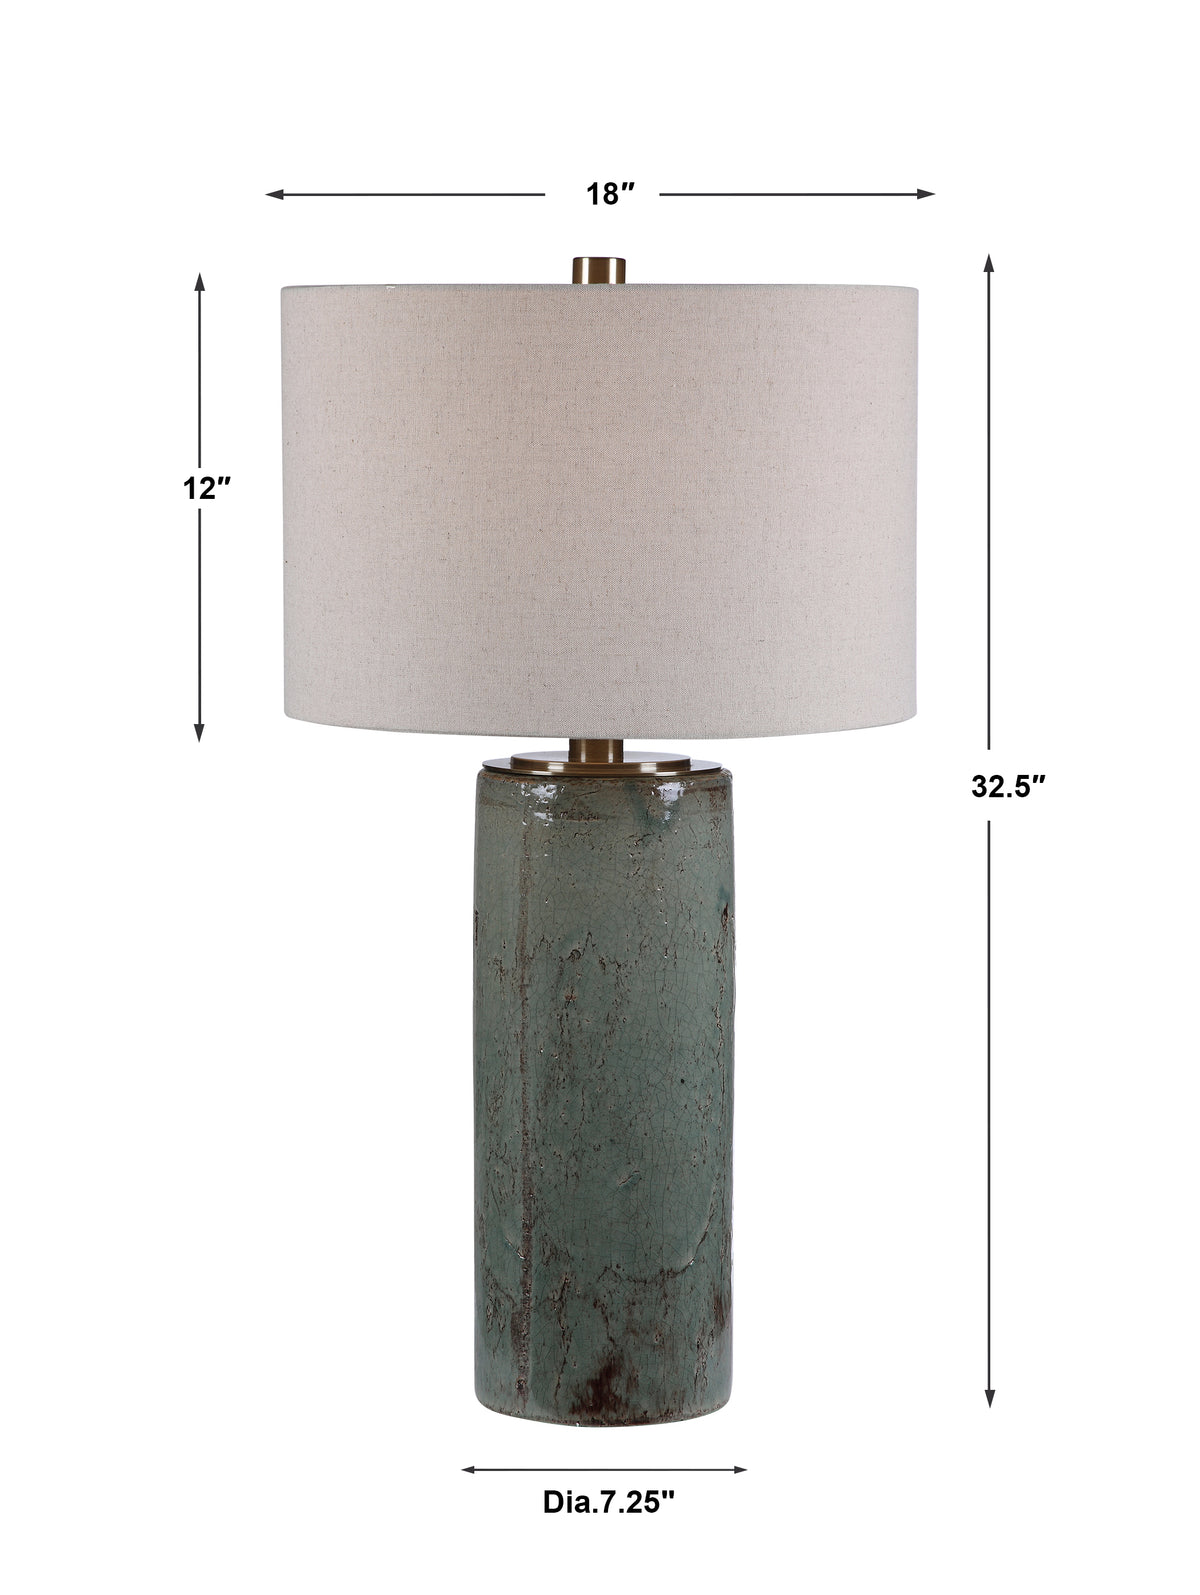 Uttermost Callais Crackled Aqua Table Lamp